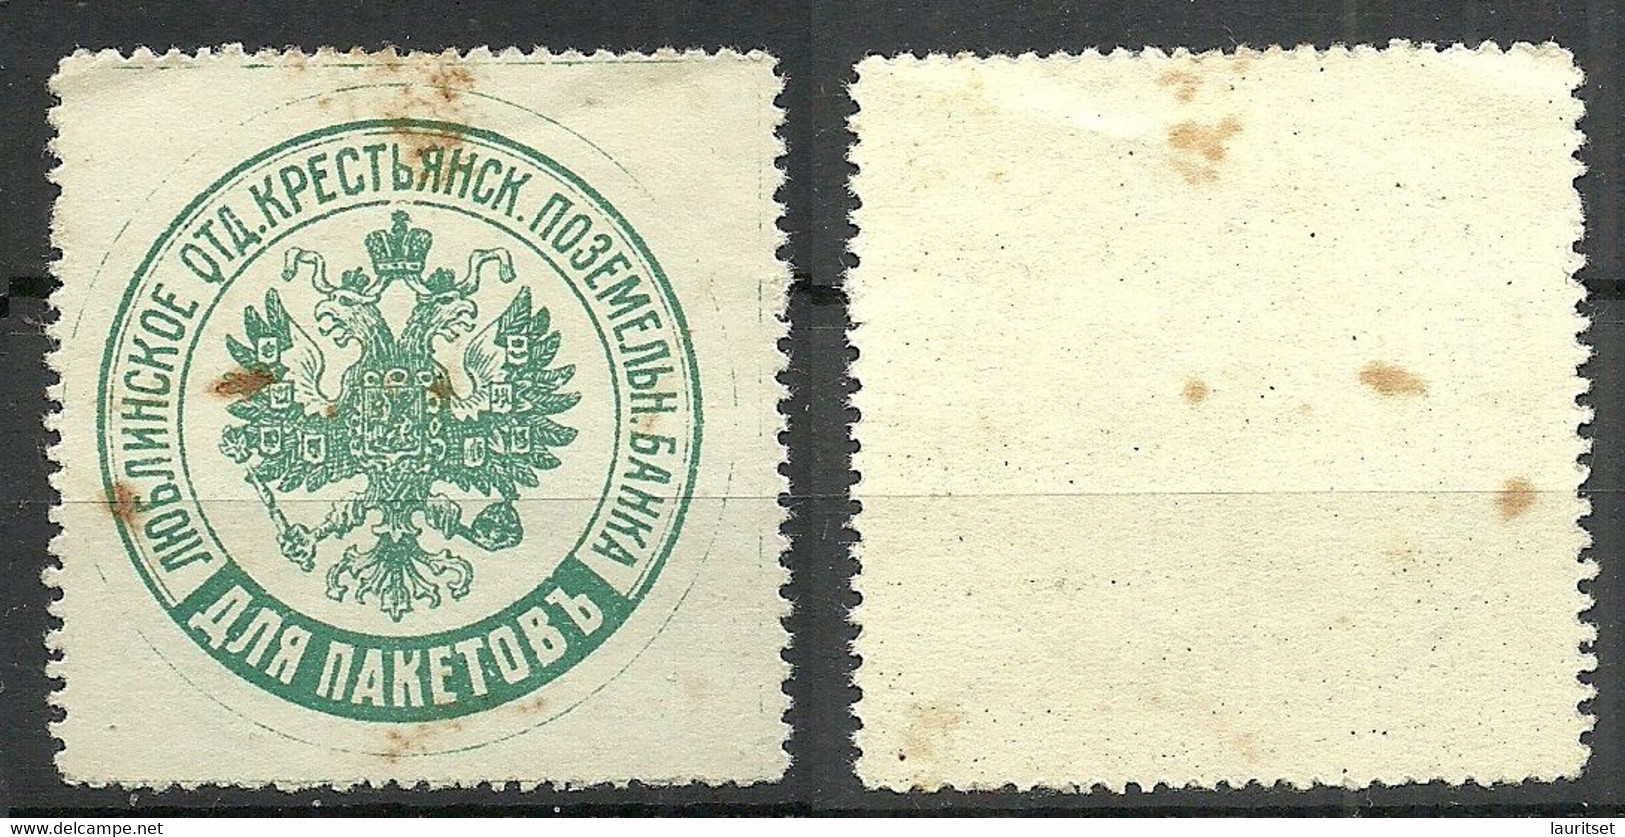 Imperial RUSSLAND RUSSIA Packet Stamp Paketenmarke Original Gum MNH Lublin Bank Poland NB! Rusty Spots! Stockfleckig! - Plaatfouten & Curiosa